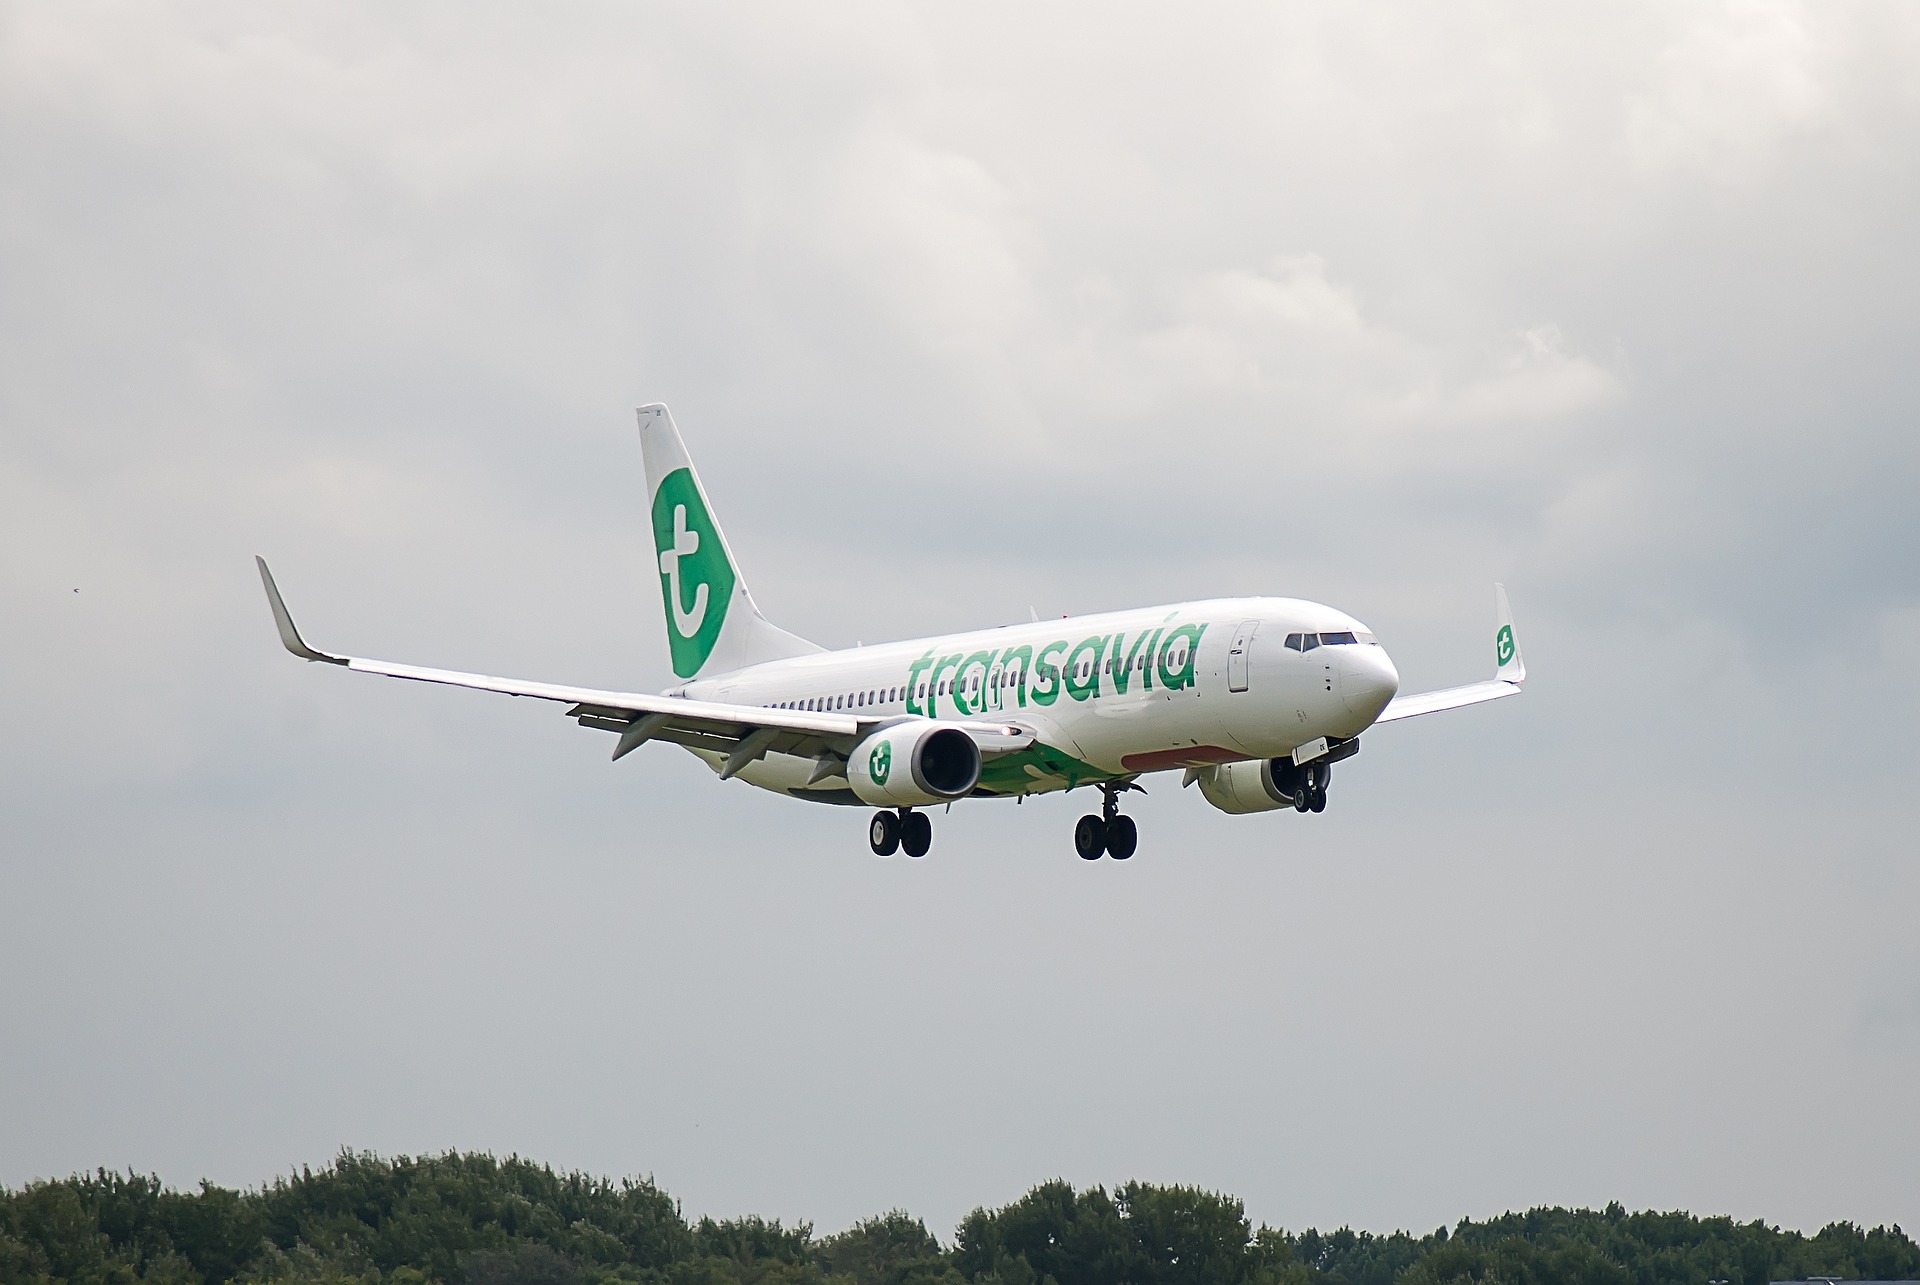 Goedkoop vliegticket met Transavia naar Dubai